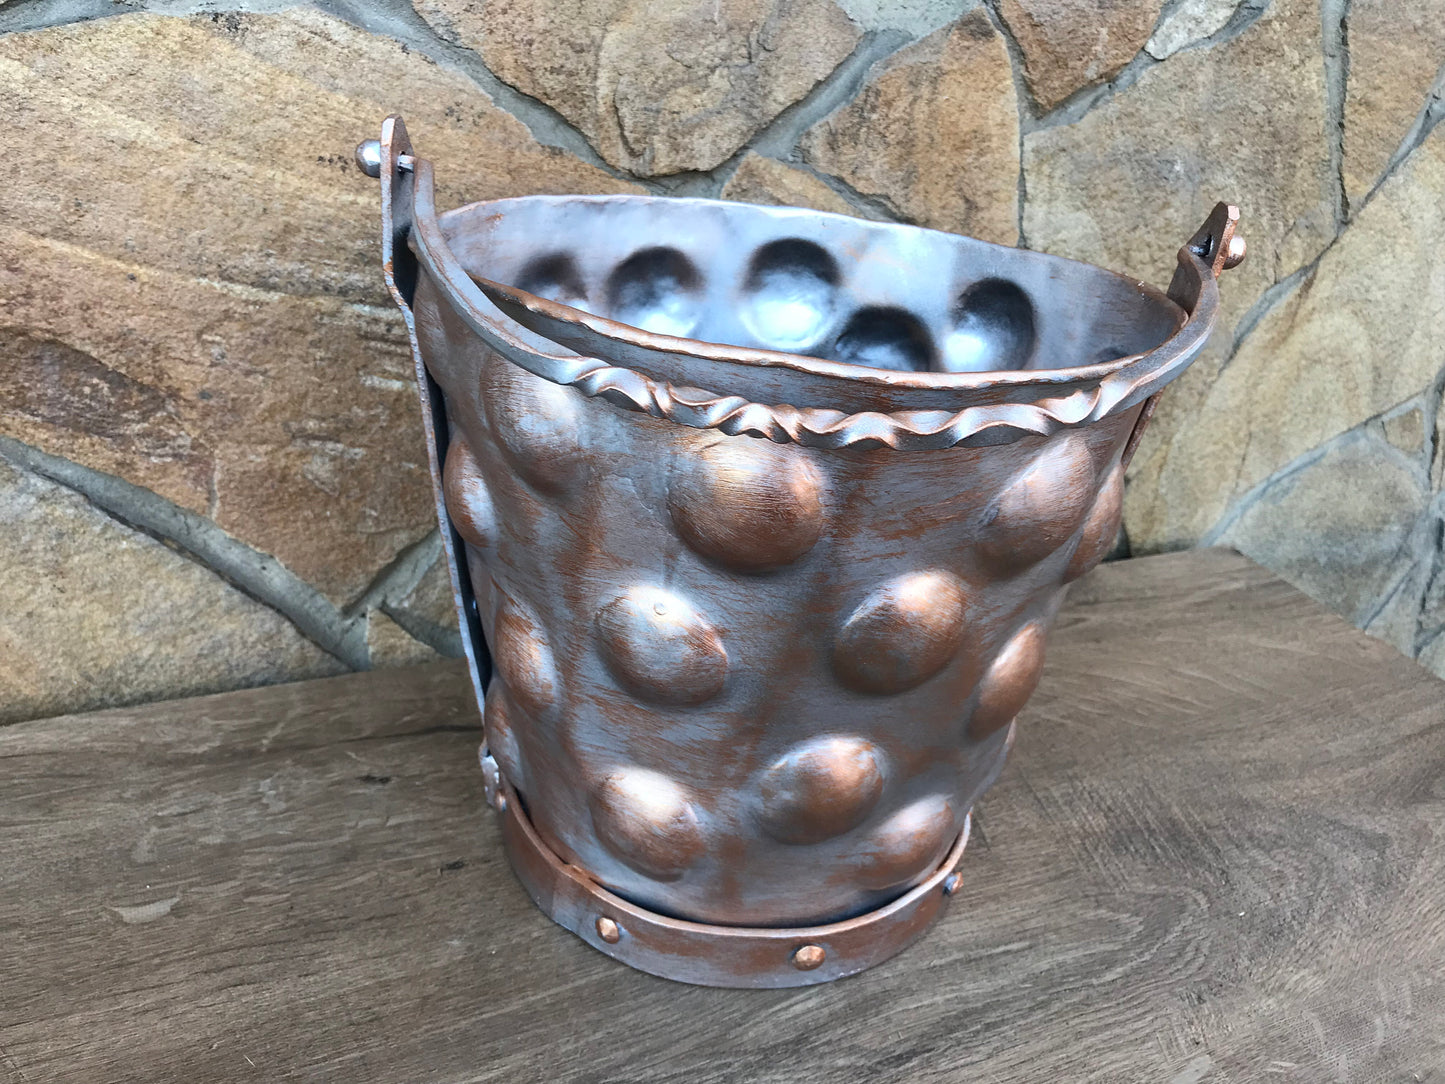 Bucket, coal bucket, ash bucket, coal pail, coal scuttle, coal scuttle bucket, firewood bucket,hand forged bucket,fireplace decor,fire poker